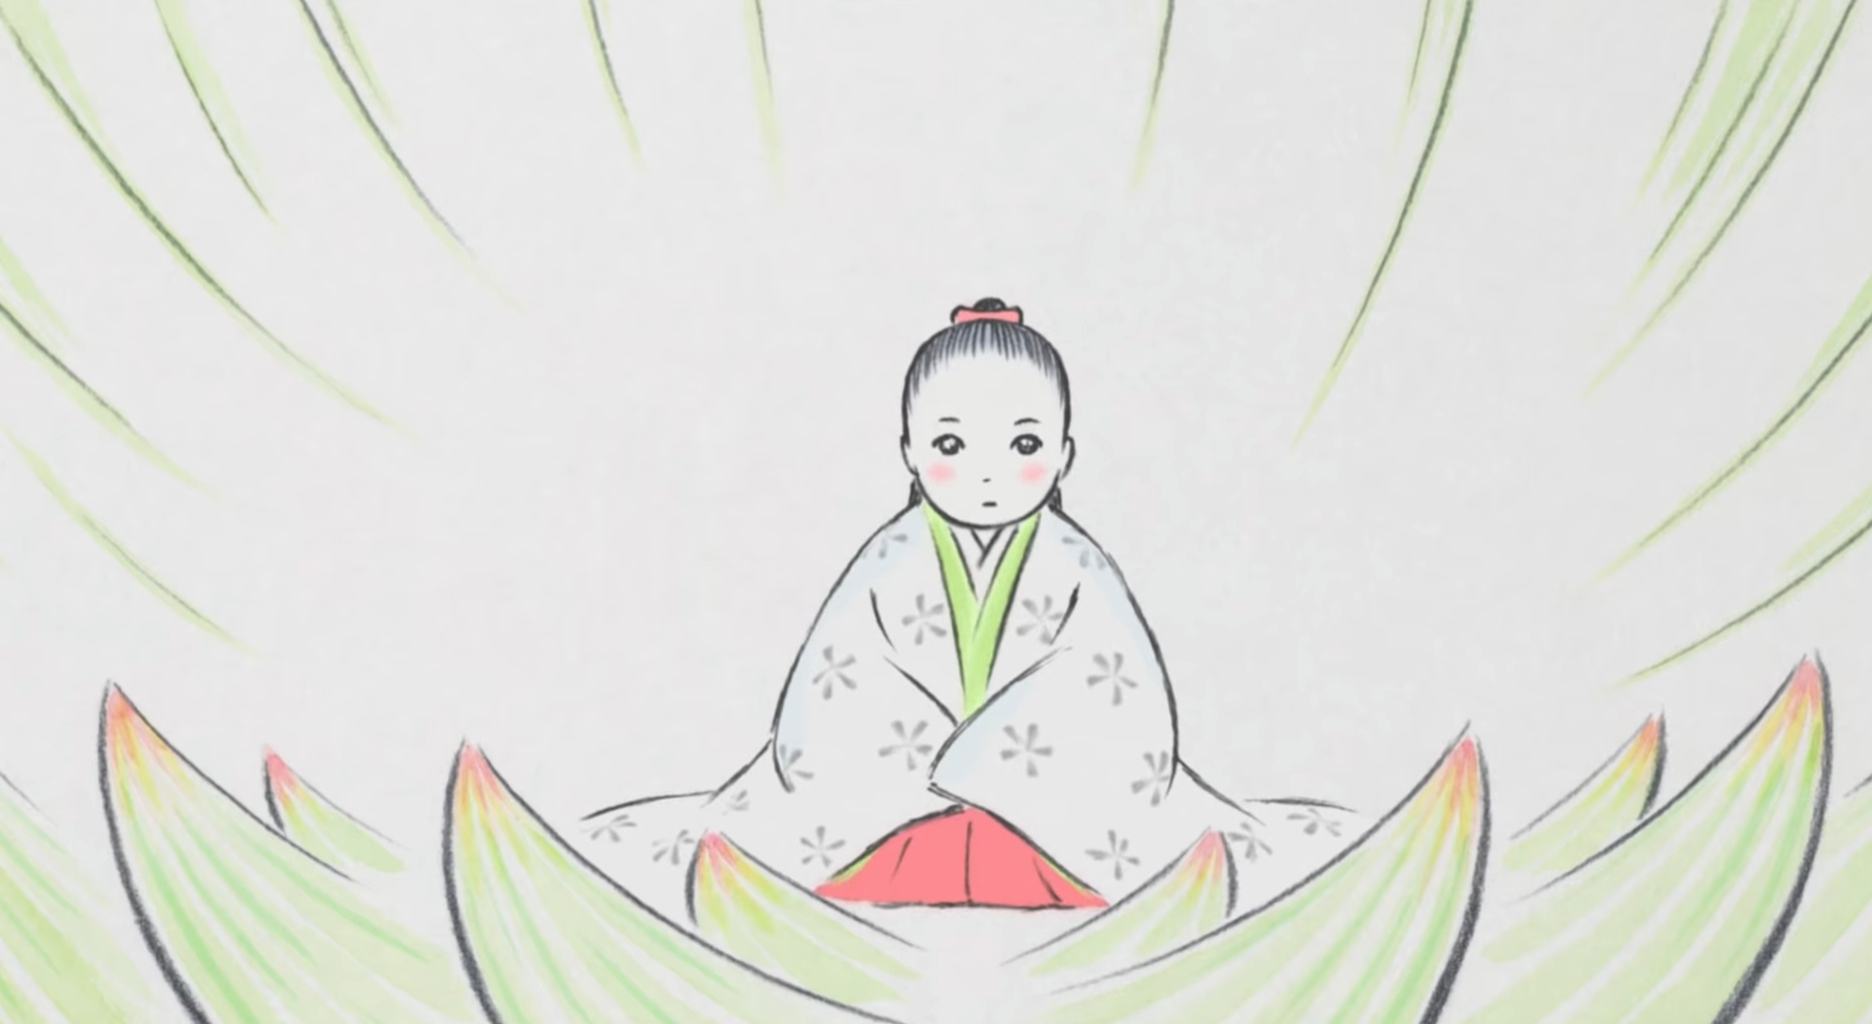 The Tale of the Princess Kaguya